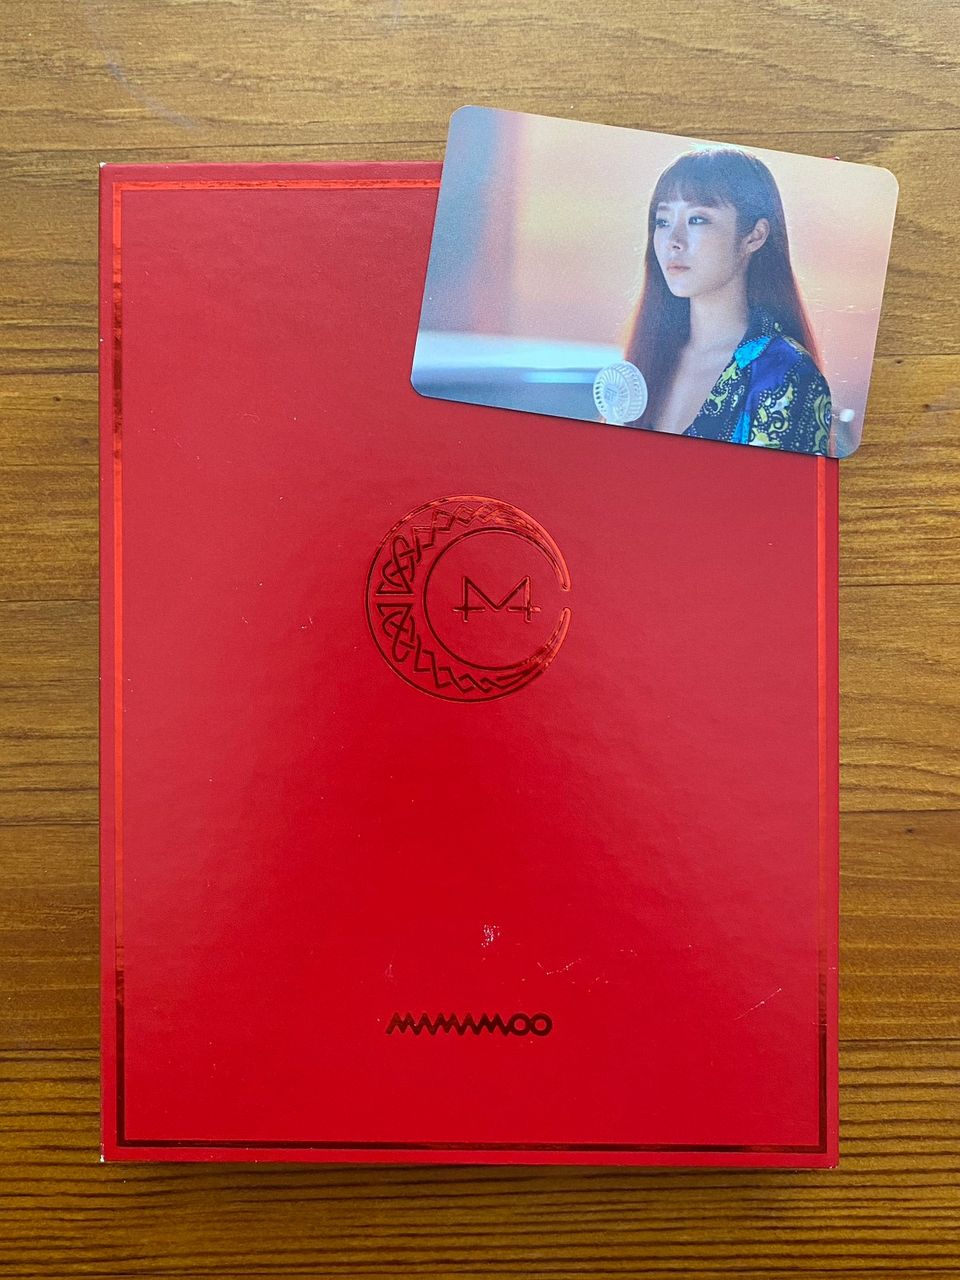 Mamamoo Red Moon albumi kpop